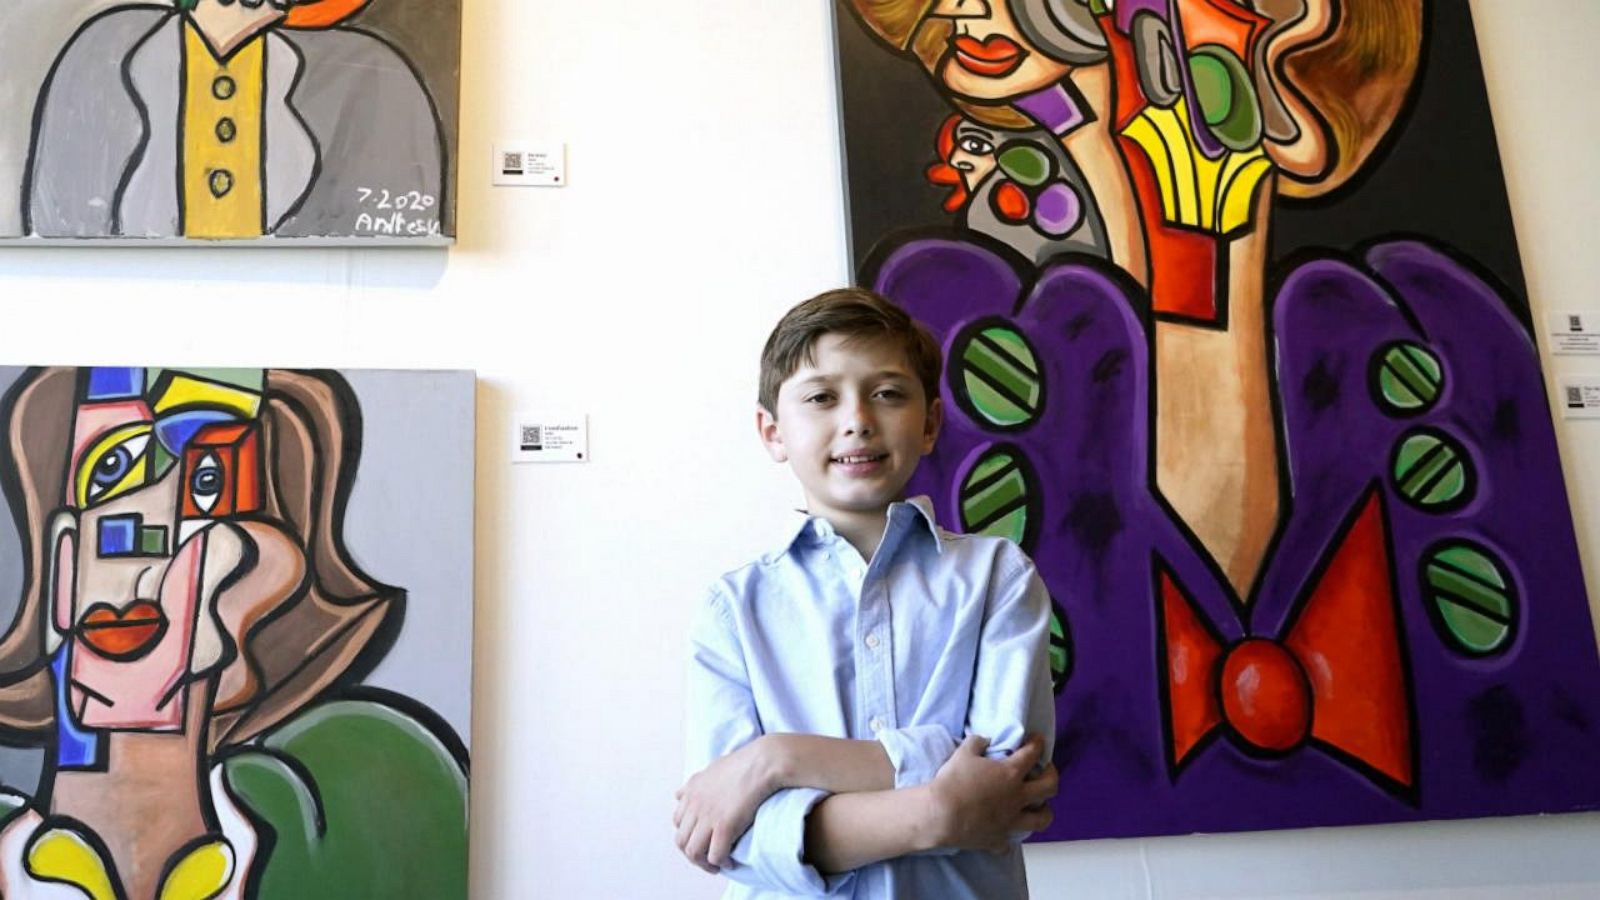 10-year-old artist taking over Miami Art Week - Good Morning America